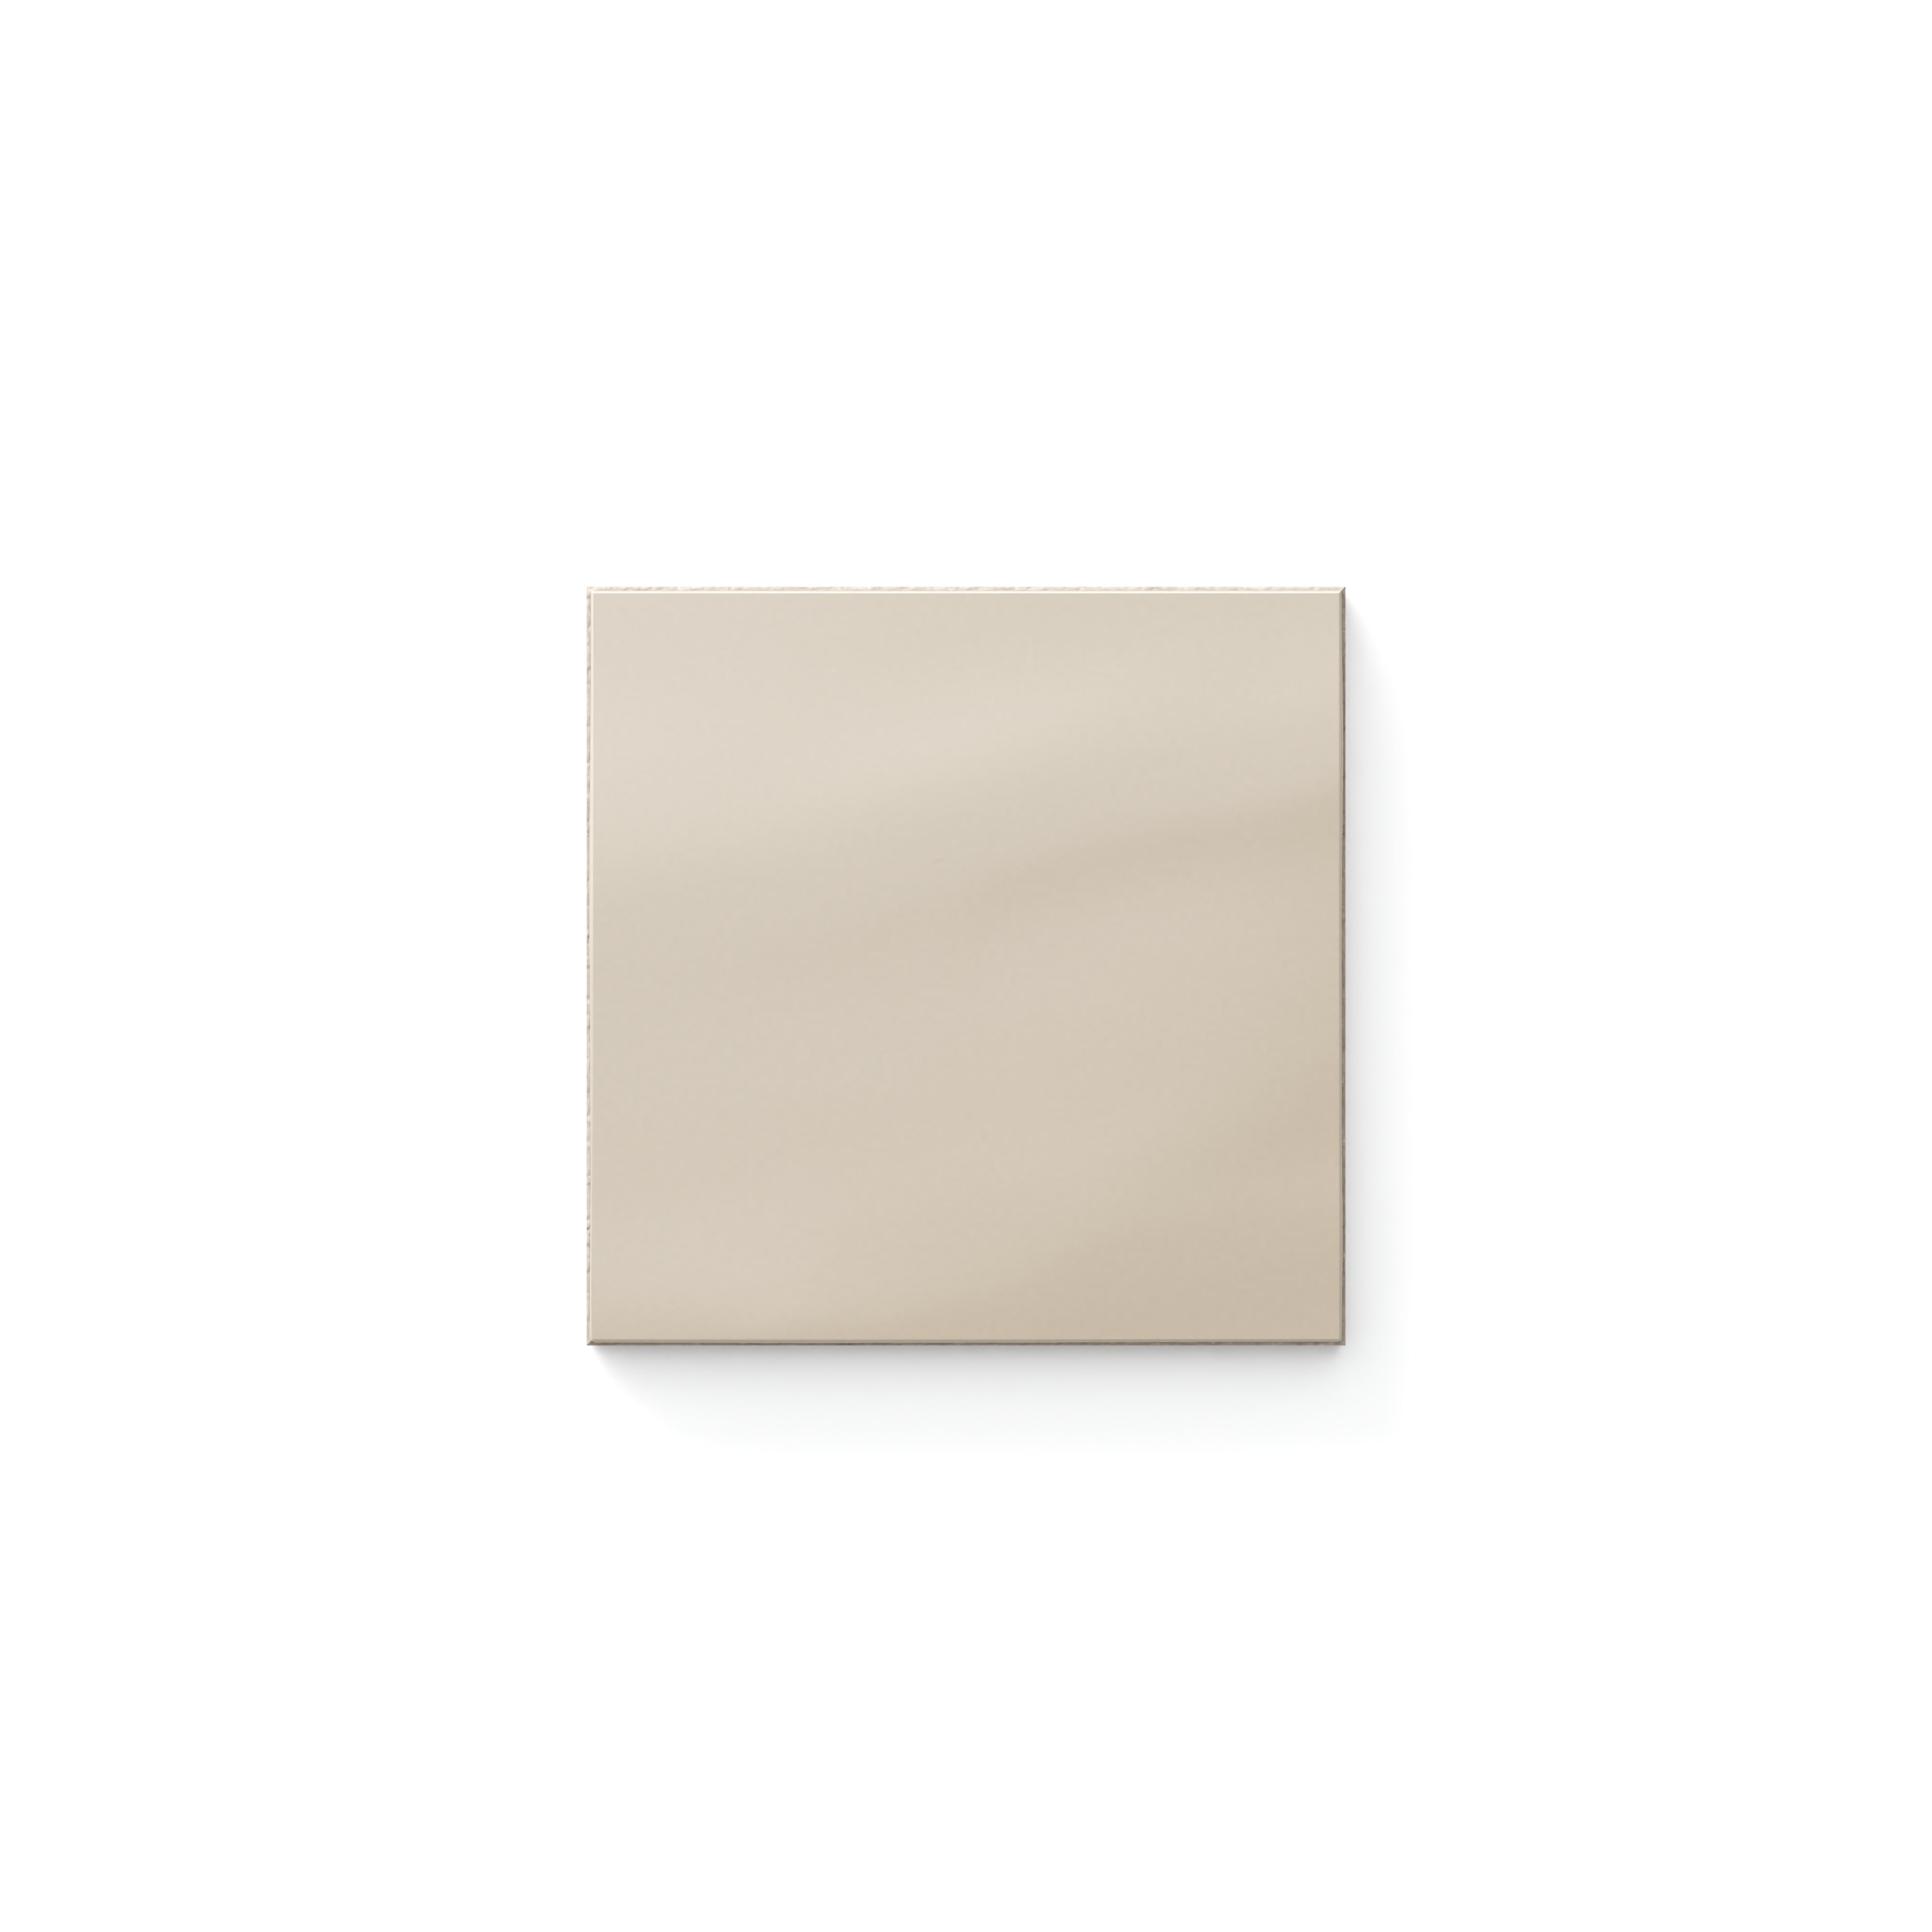 Palmer Glossy Sand 4x4 Tile Sample